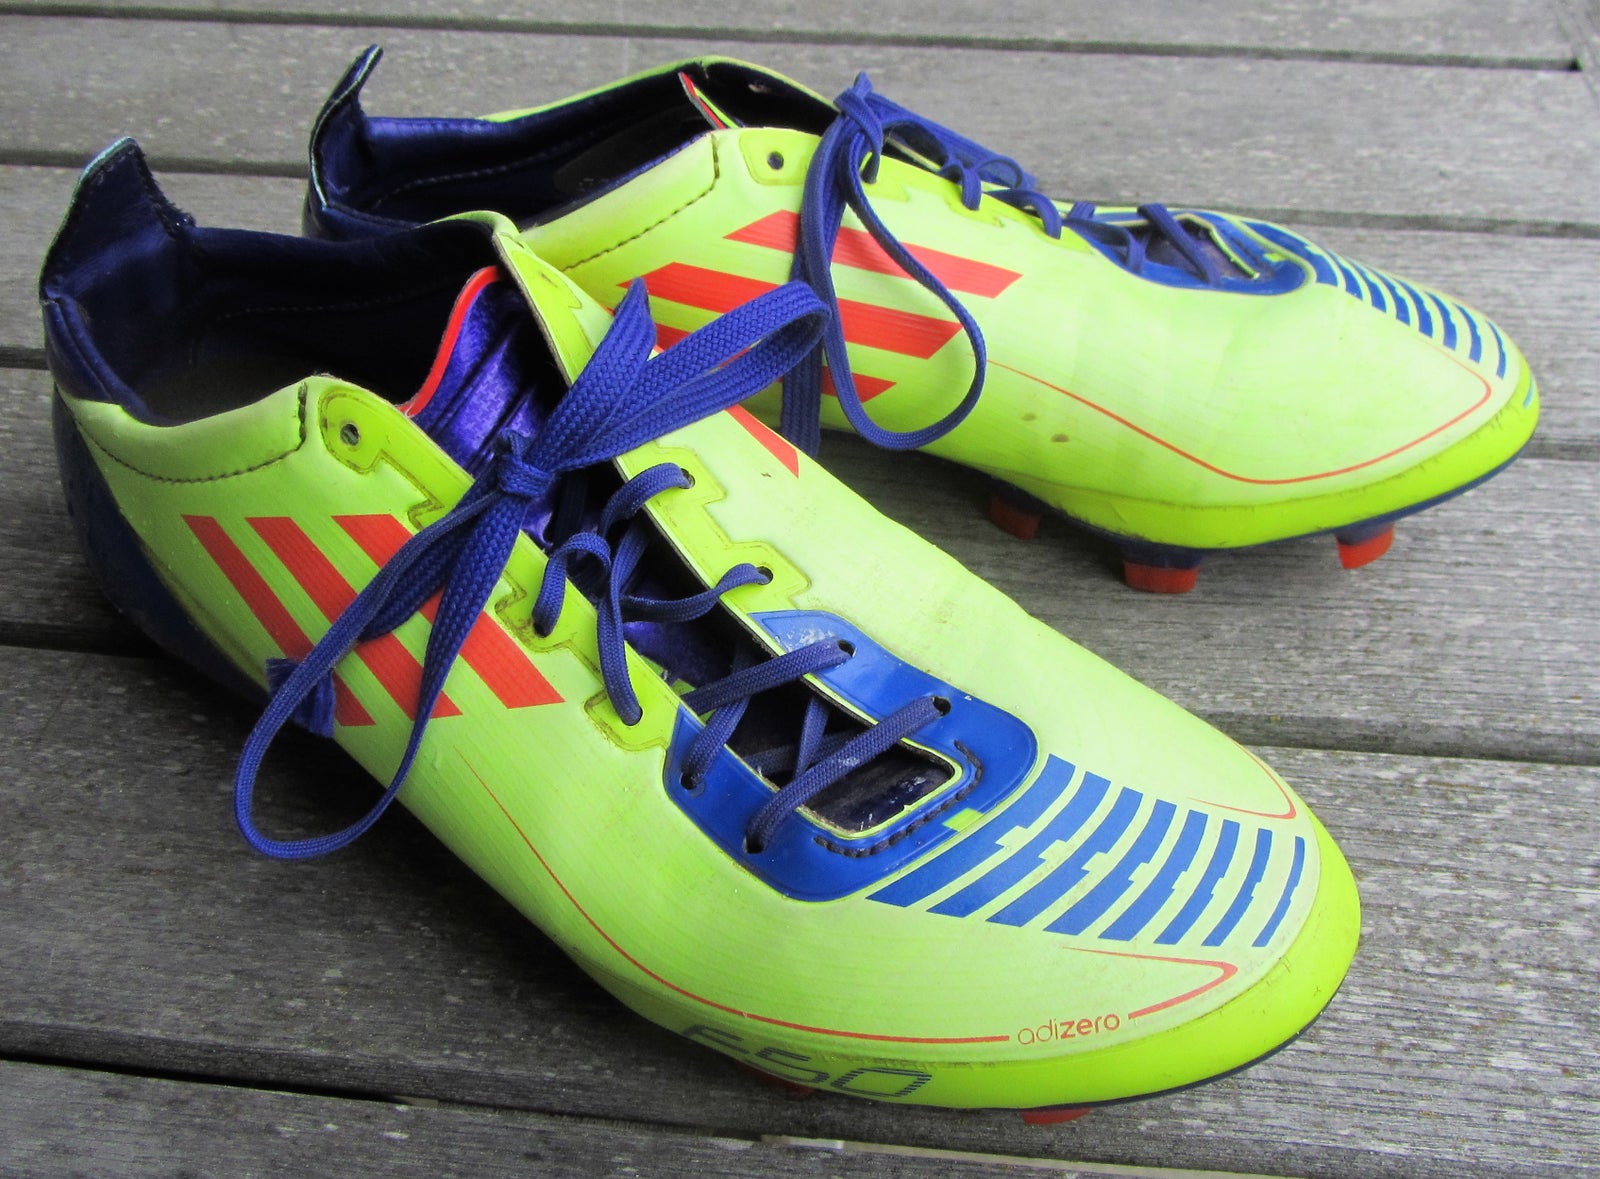 Fodboldstøvler, fodbold støvler / fodboldsko, Adidas F50